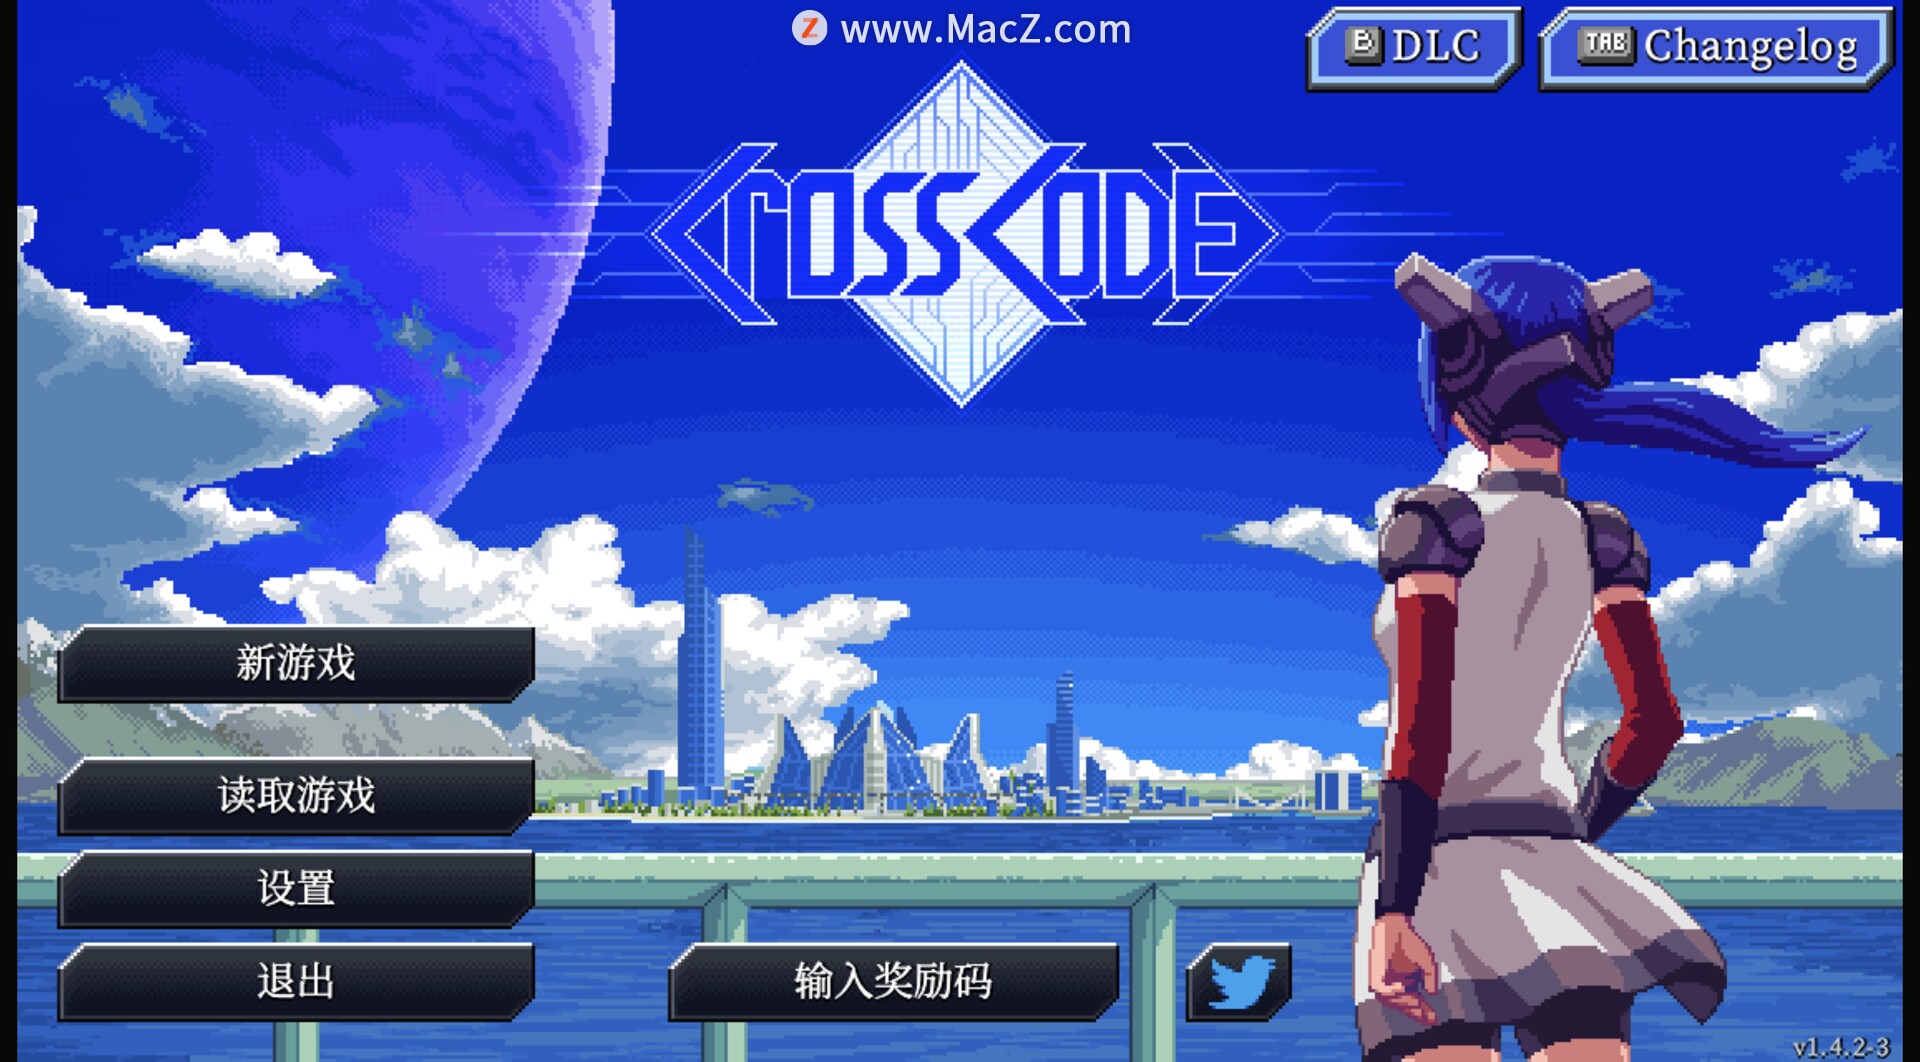 远星物语 CrossCode for Mac(像素风格RPG游戏) 2.22 GB 简体中文